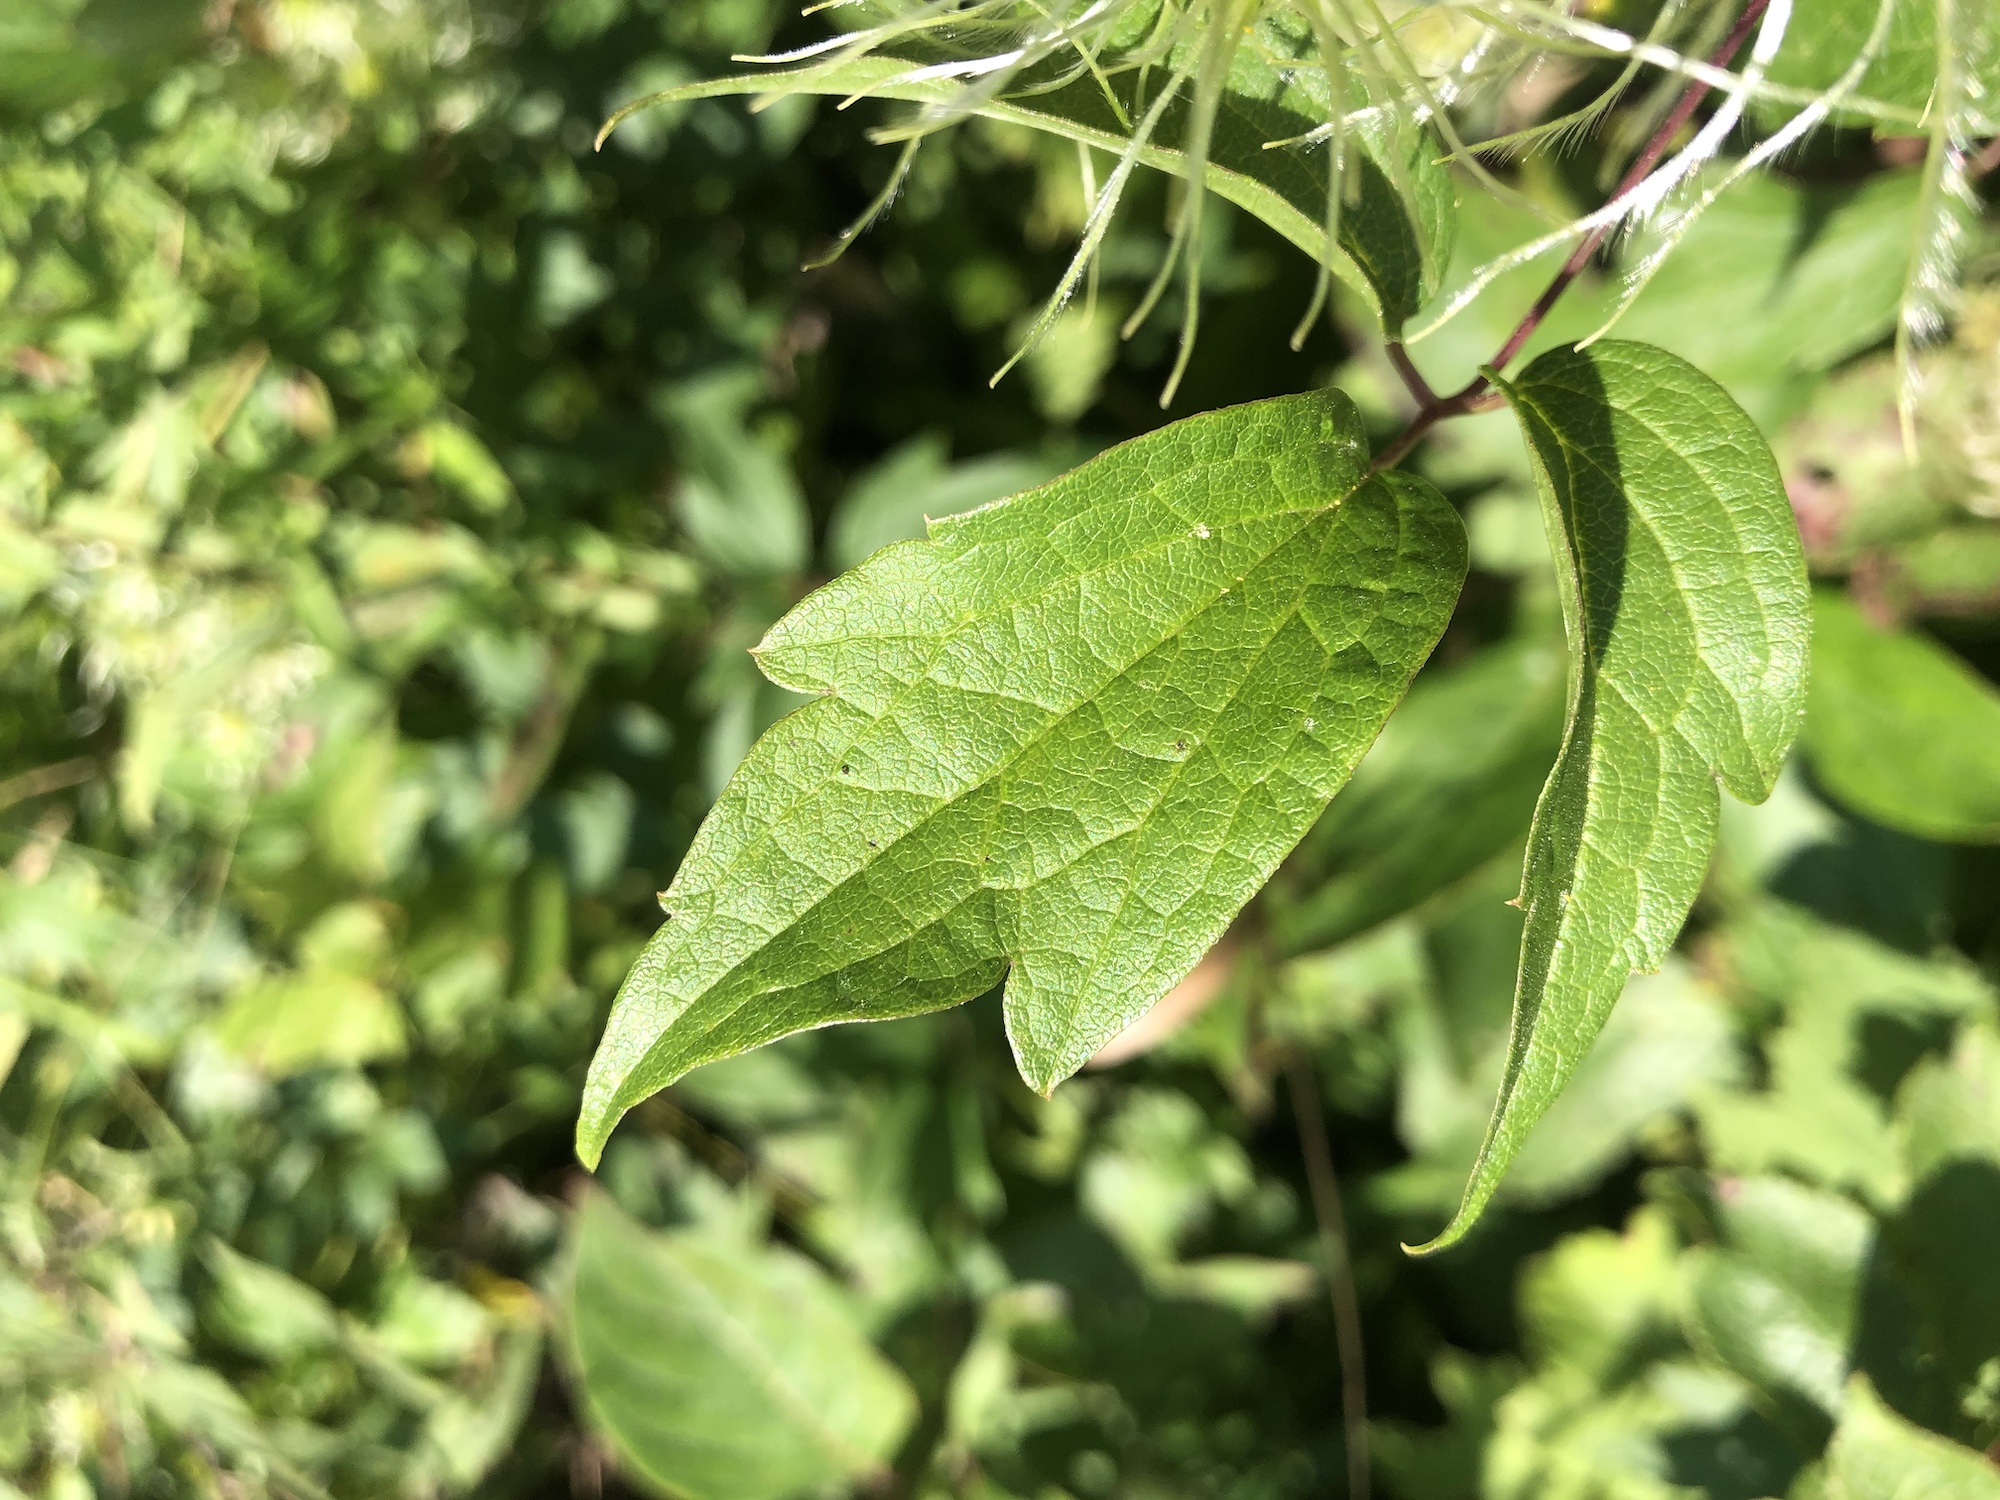 Virgin's Bower leaf in UW Arboretum's Curtis Prairie in Madison, Wisconsin on September 9, 2022.